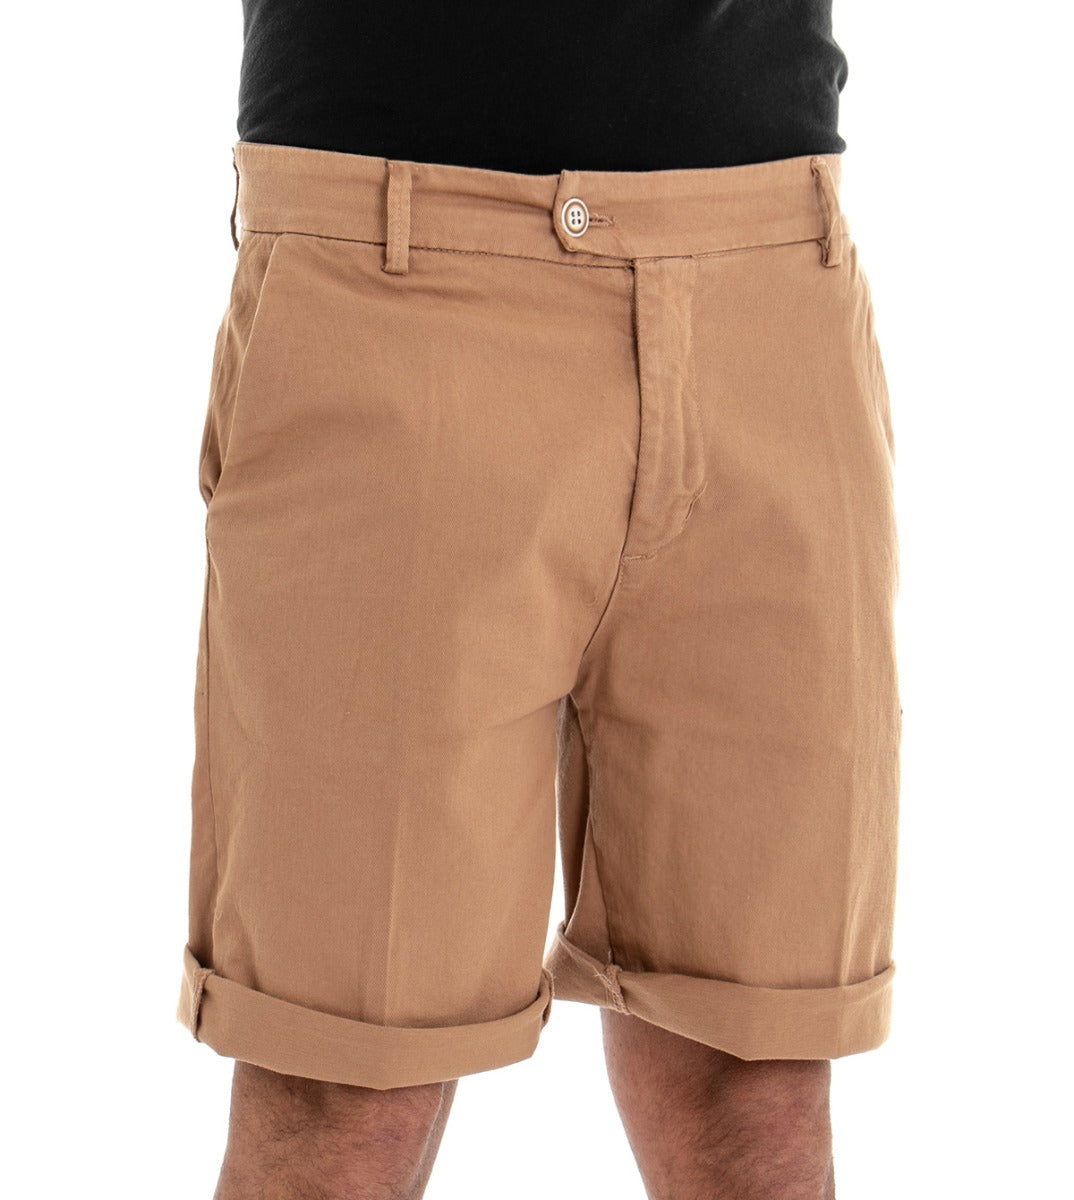 Bermuda Short Men's Shorts Camel Cotton America Pocket GIOSAL-PC1380A